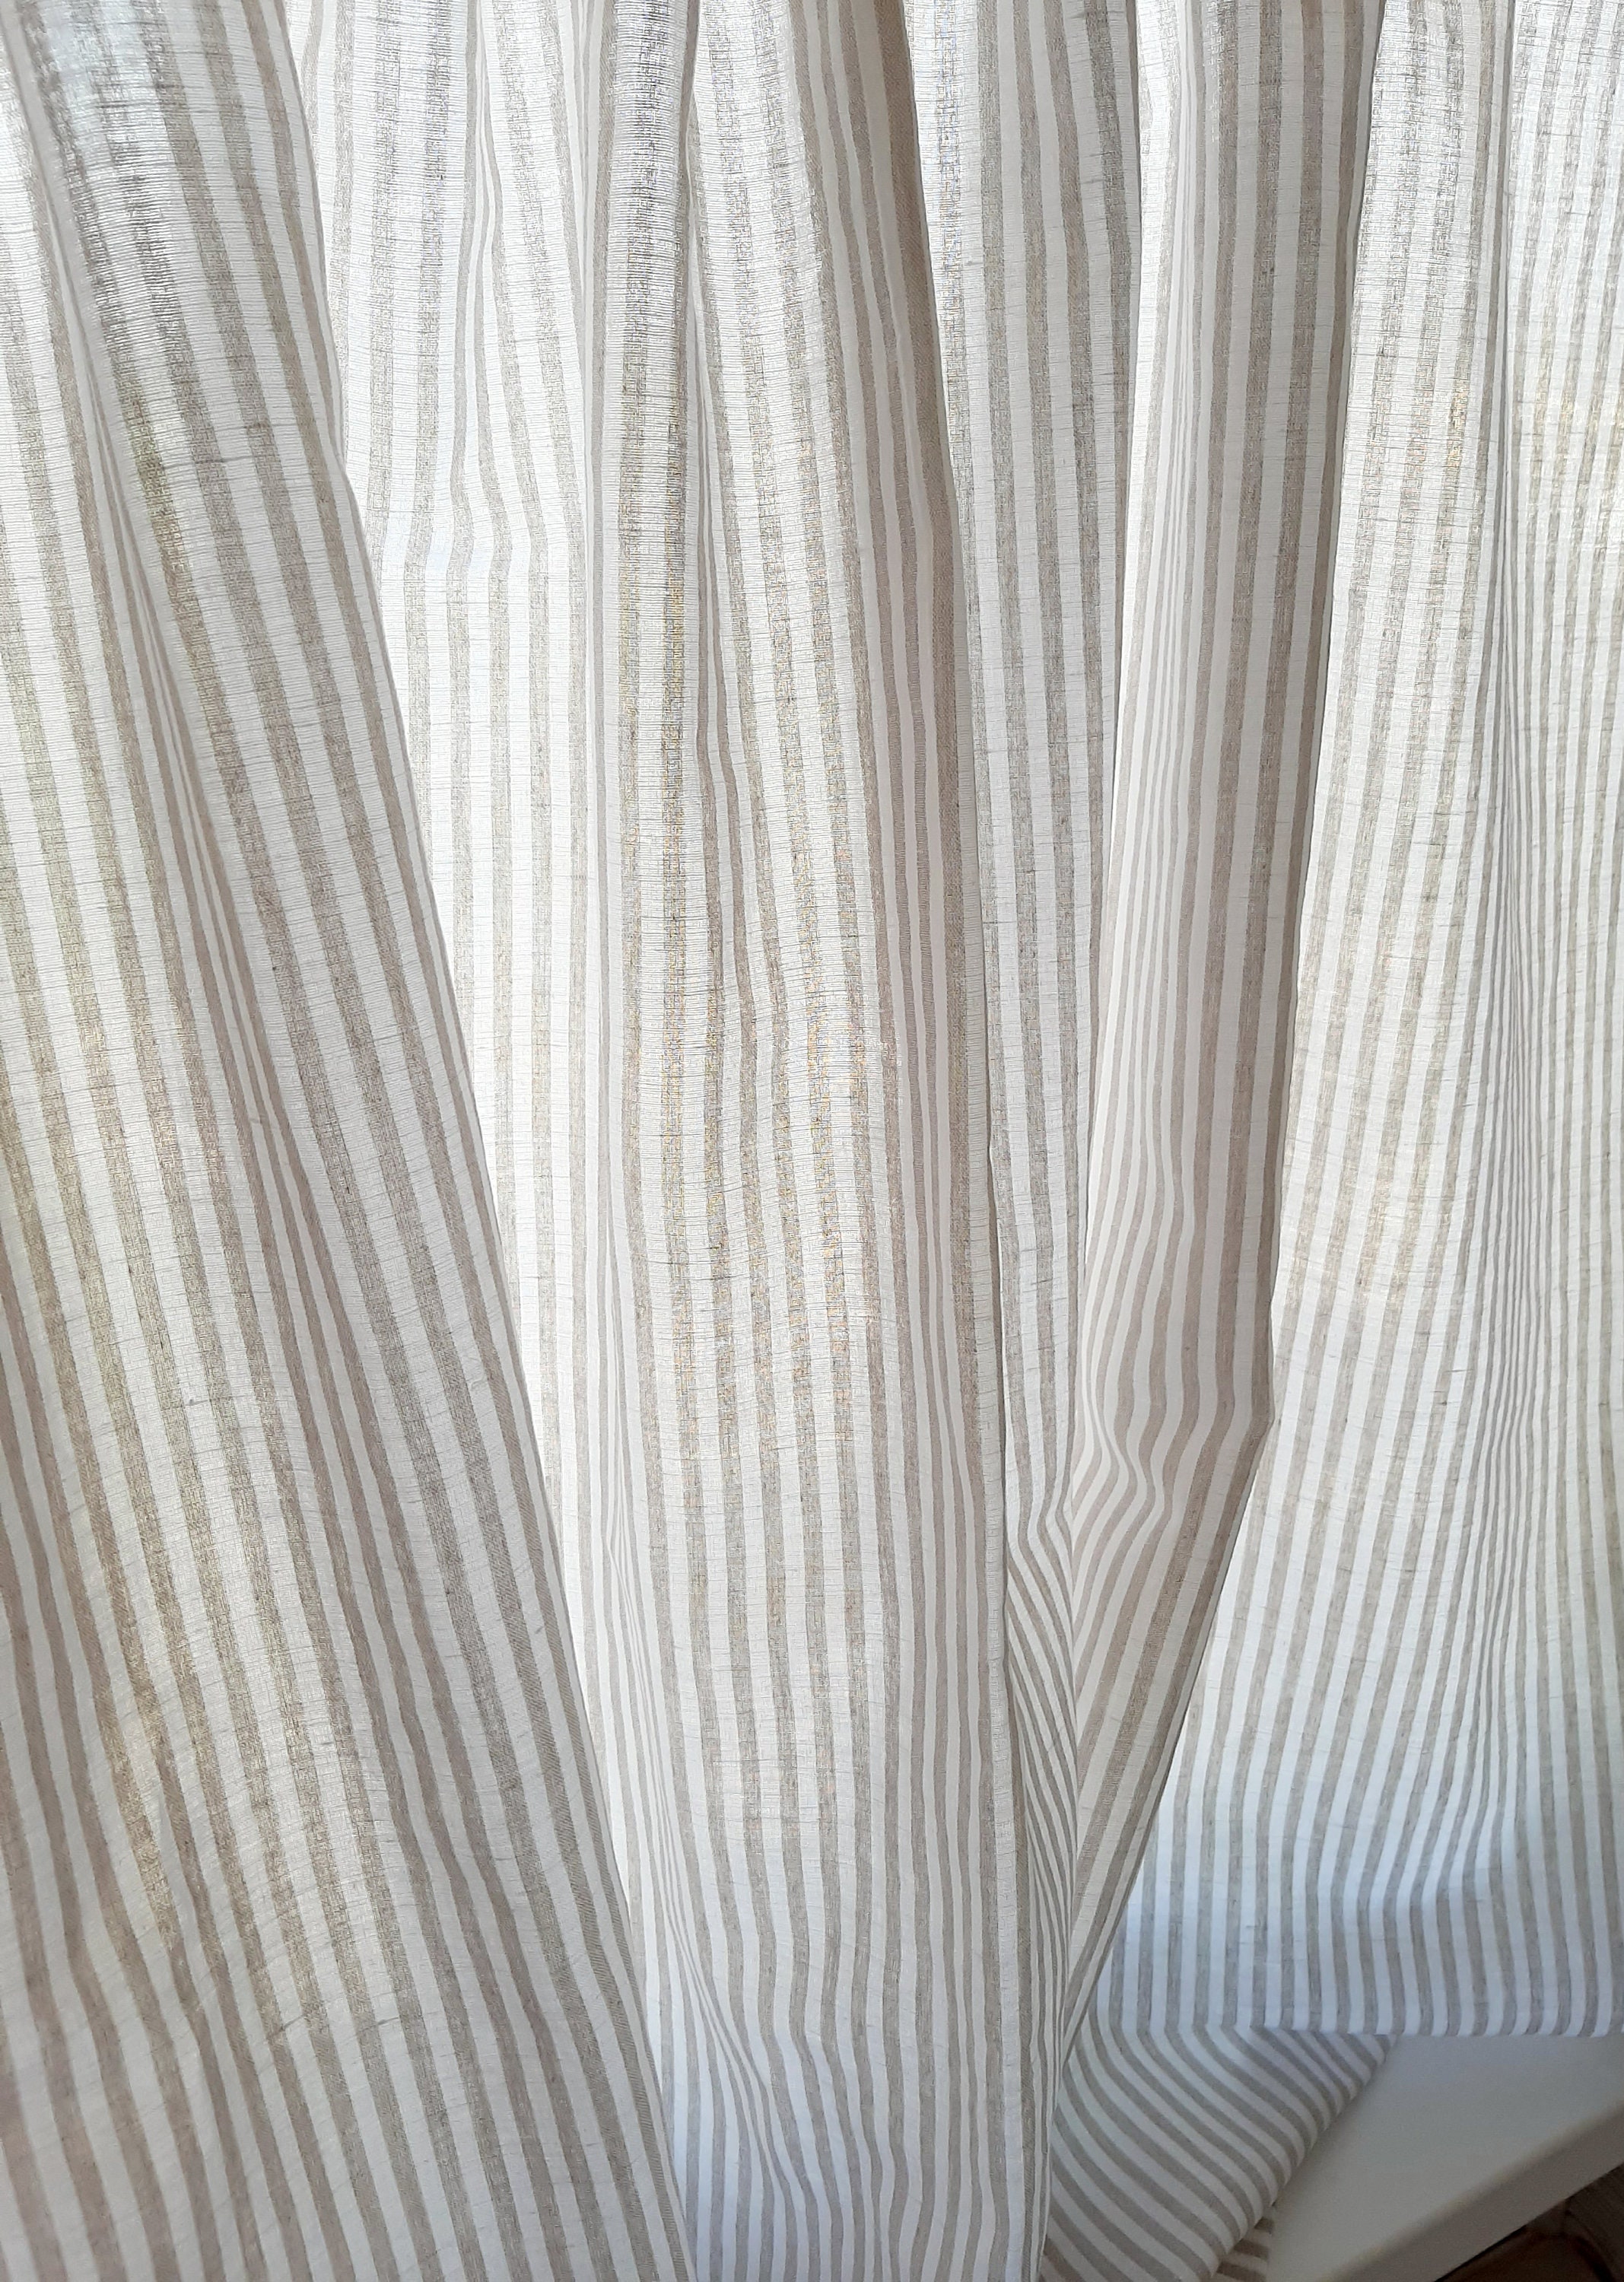 Kitchen curtains linen curtains panel farmhouse curtains | Etsy